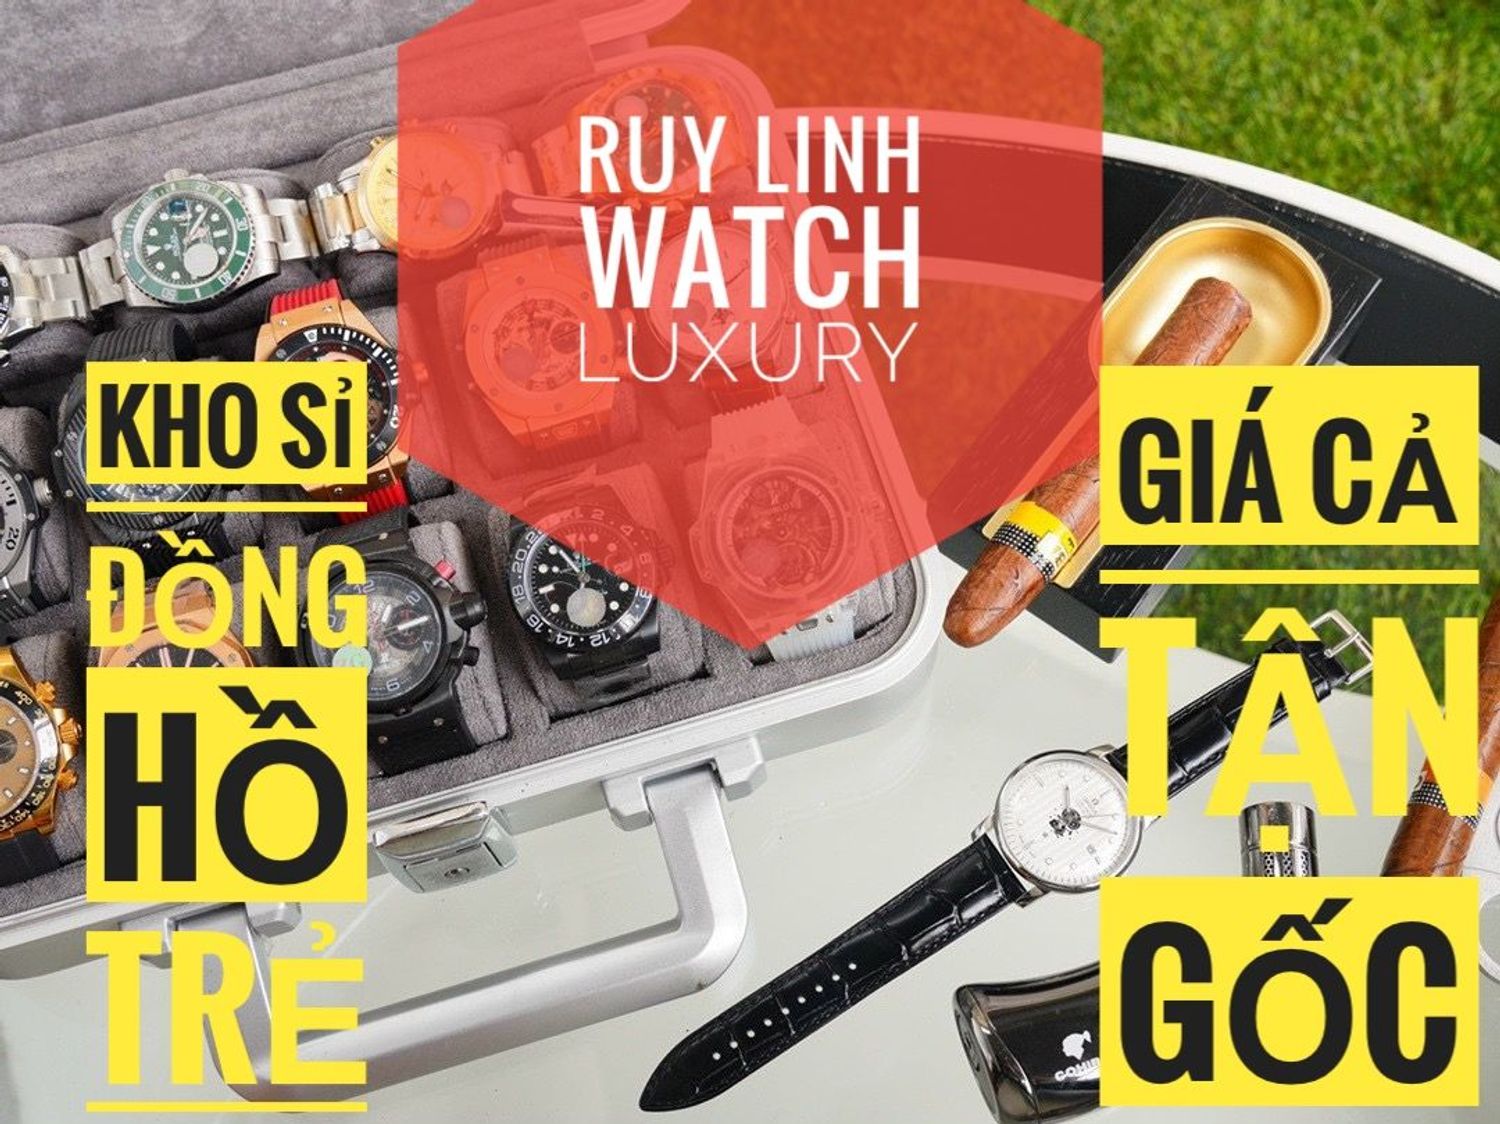 Ruy Linh Watch Luxury